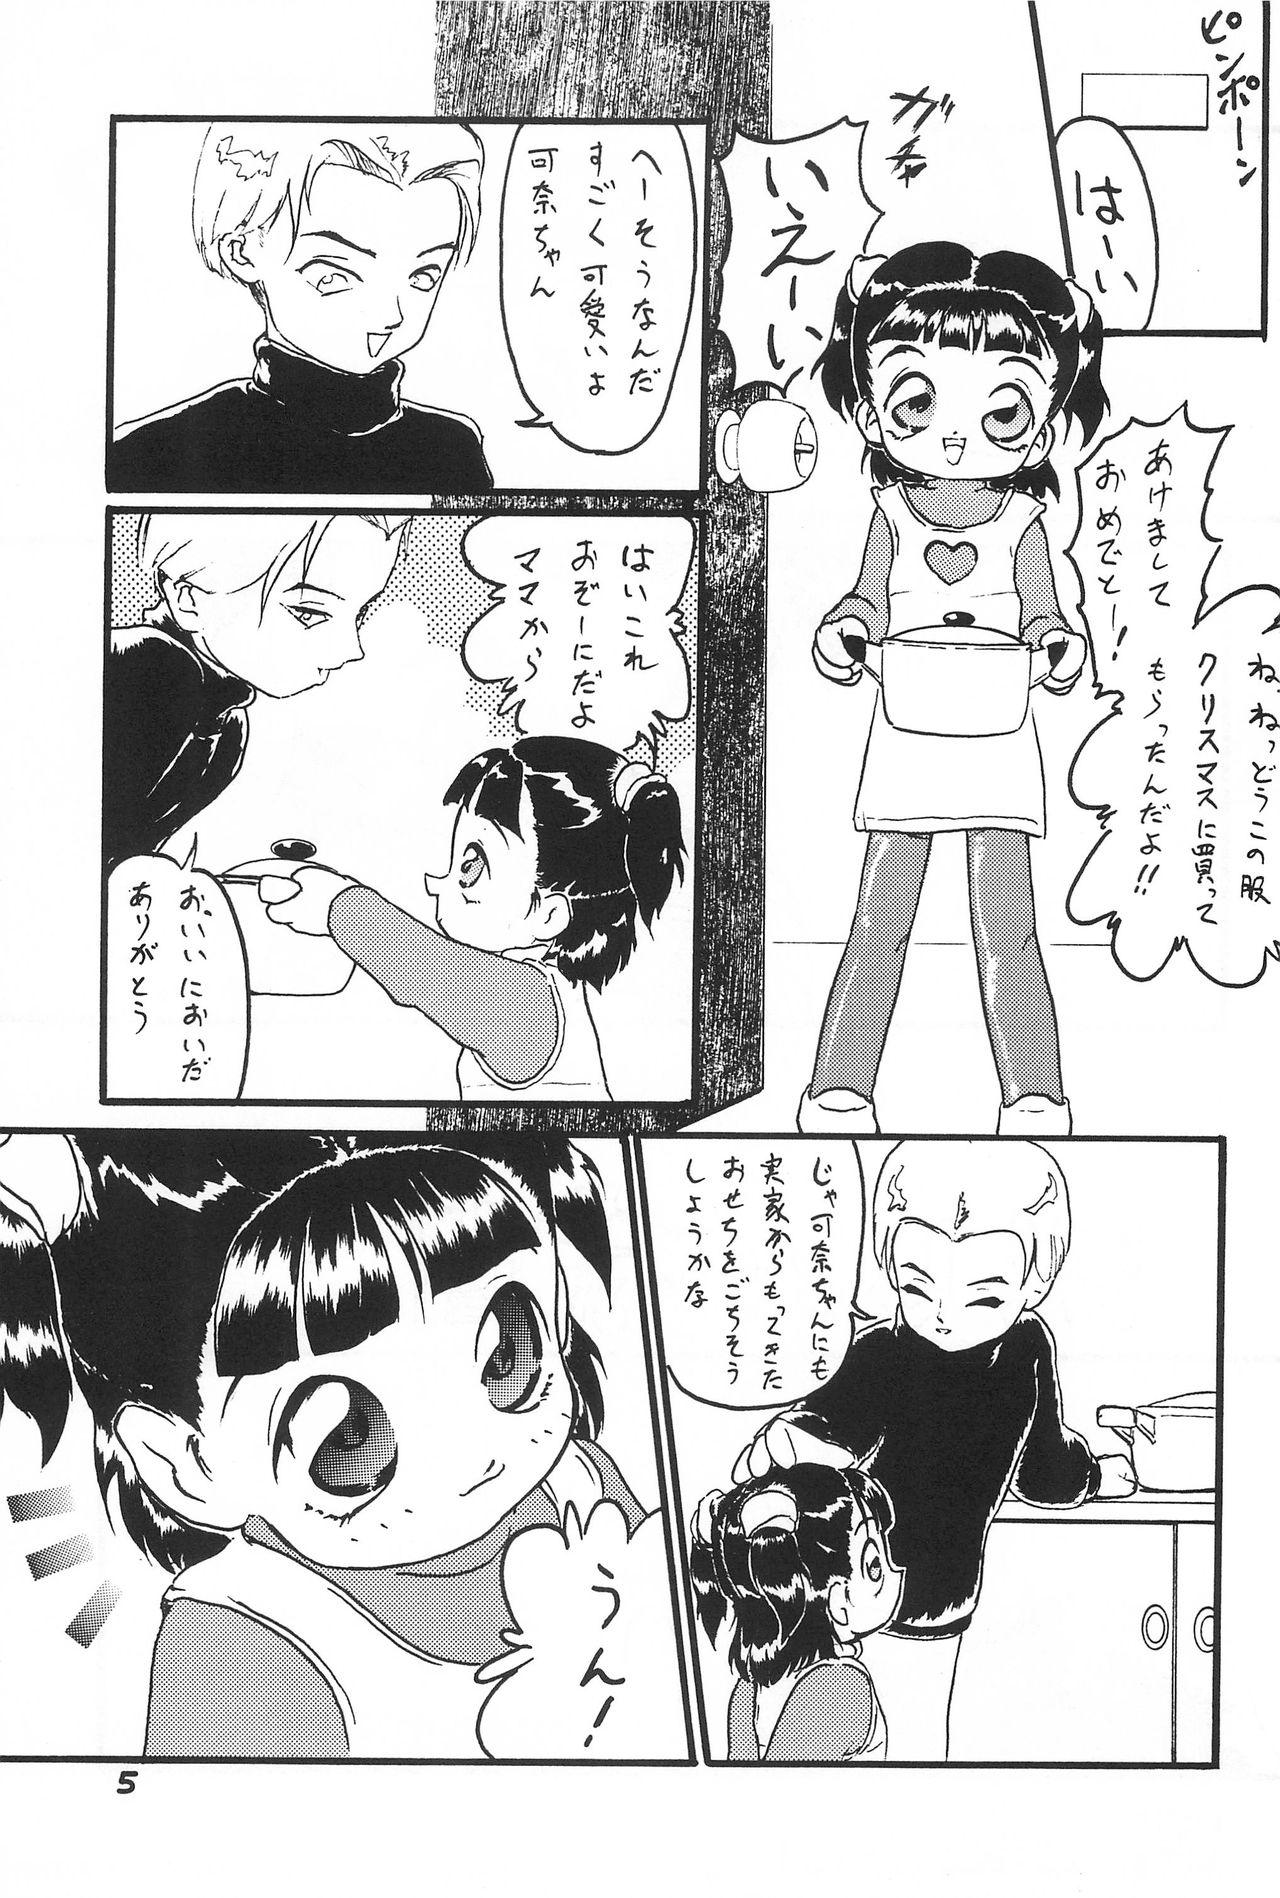 Furry Waki Waki Tengoku 2 Gets - Page 7